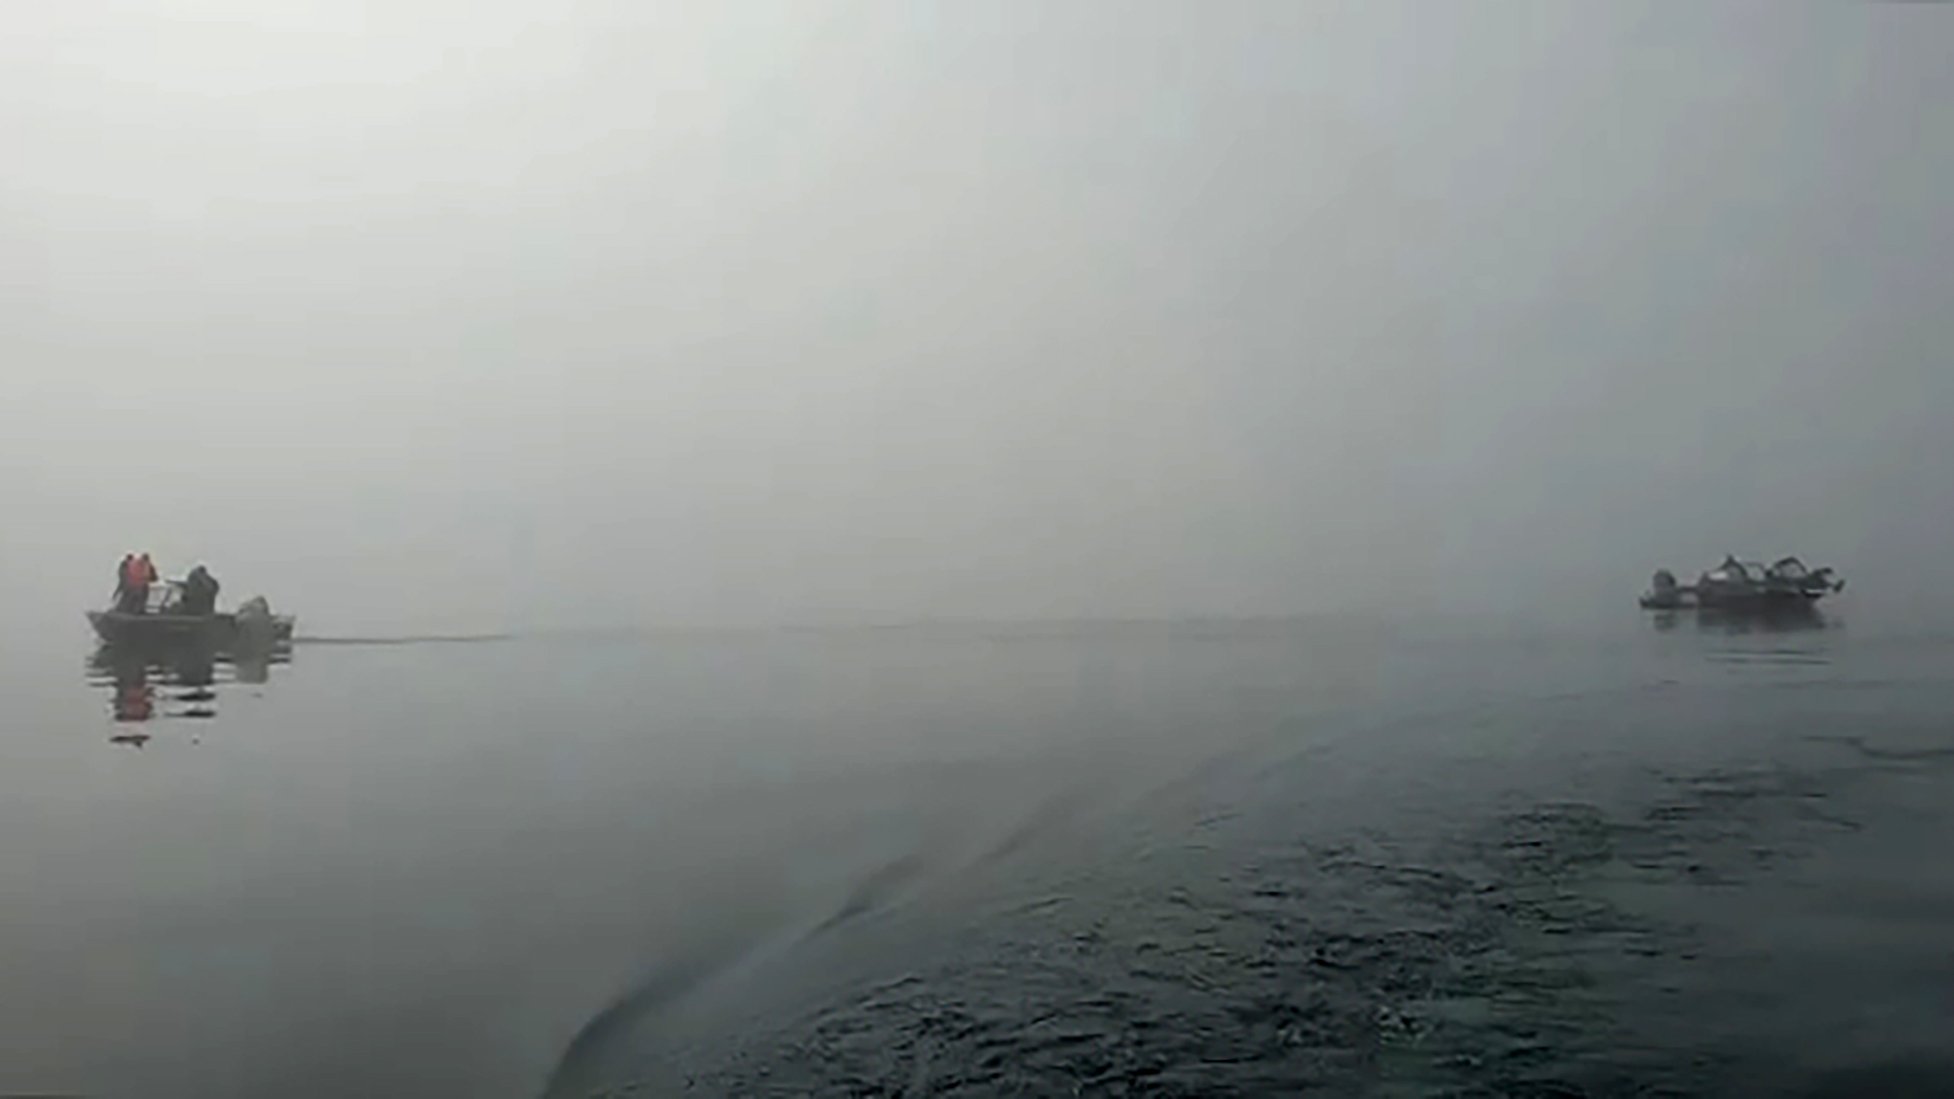 Озеро разбита. Крушение вертолета на Камчатке озеро Курильское. Вертолет в Курильском озере. Вертолет упал в озеро. 12 Августа, Камчатка. Вертолет ми-8 рухнул в озеро Курильское.